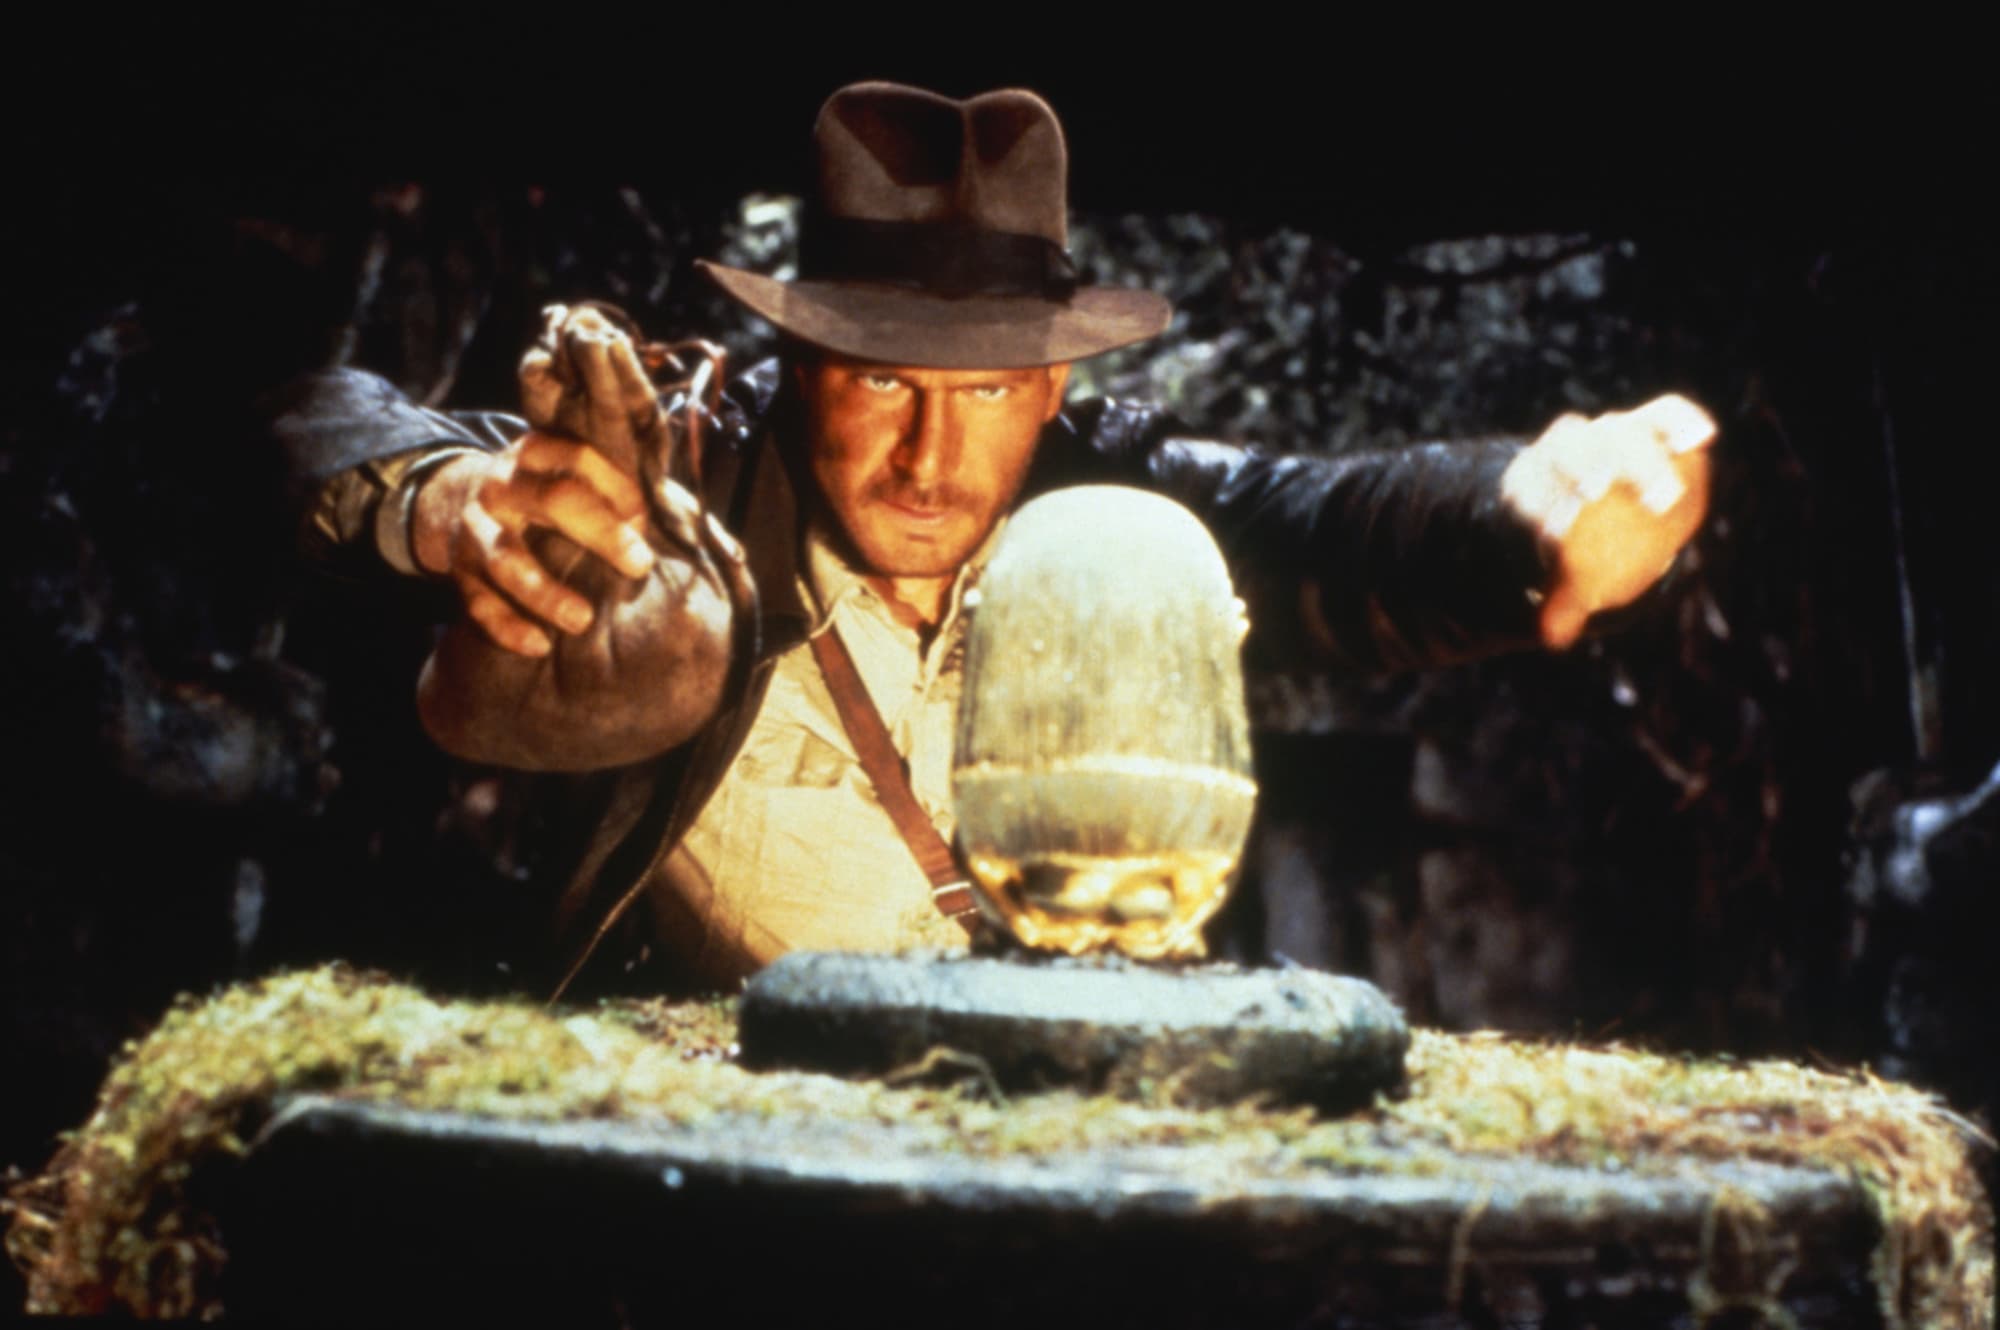 Nazis make a return for Indiana Jones' 5th film